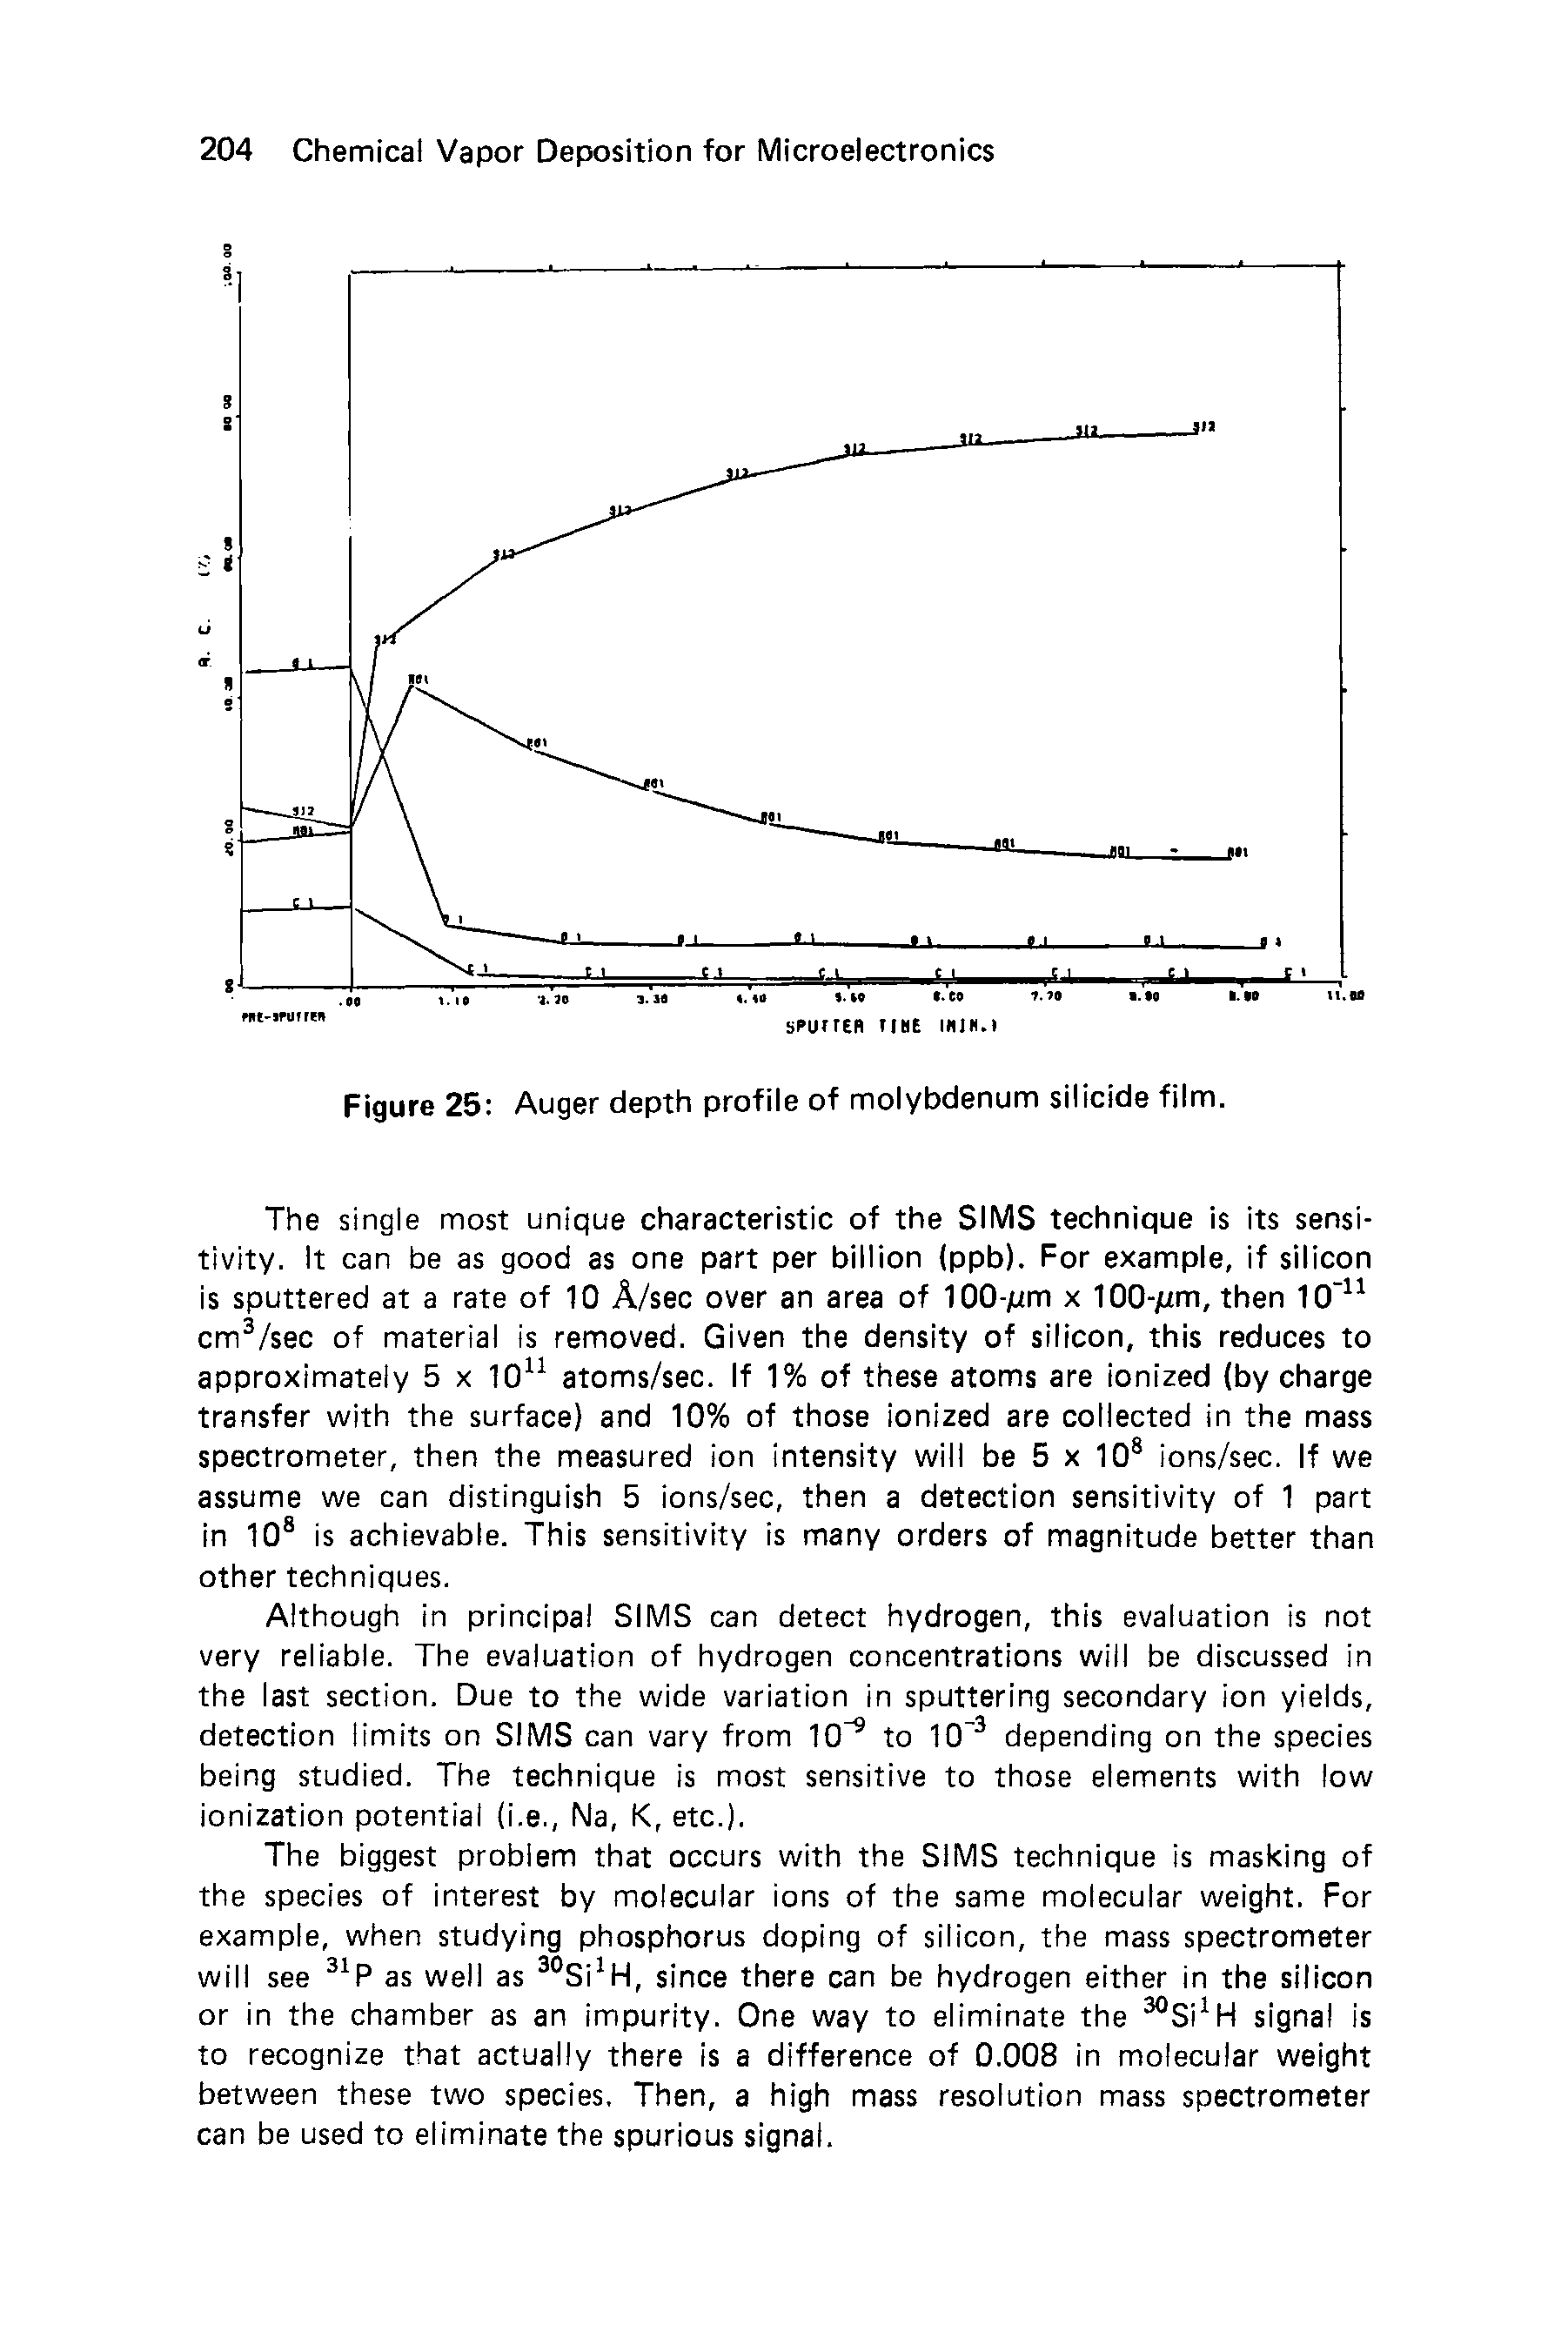 Figure 25 Auger depth profile of molybdenum silicide film.